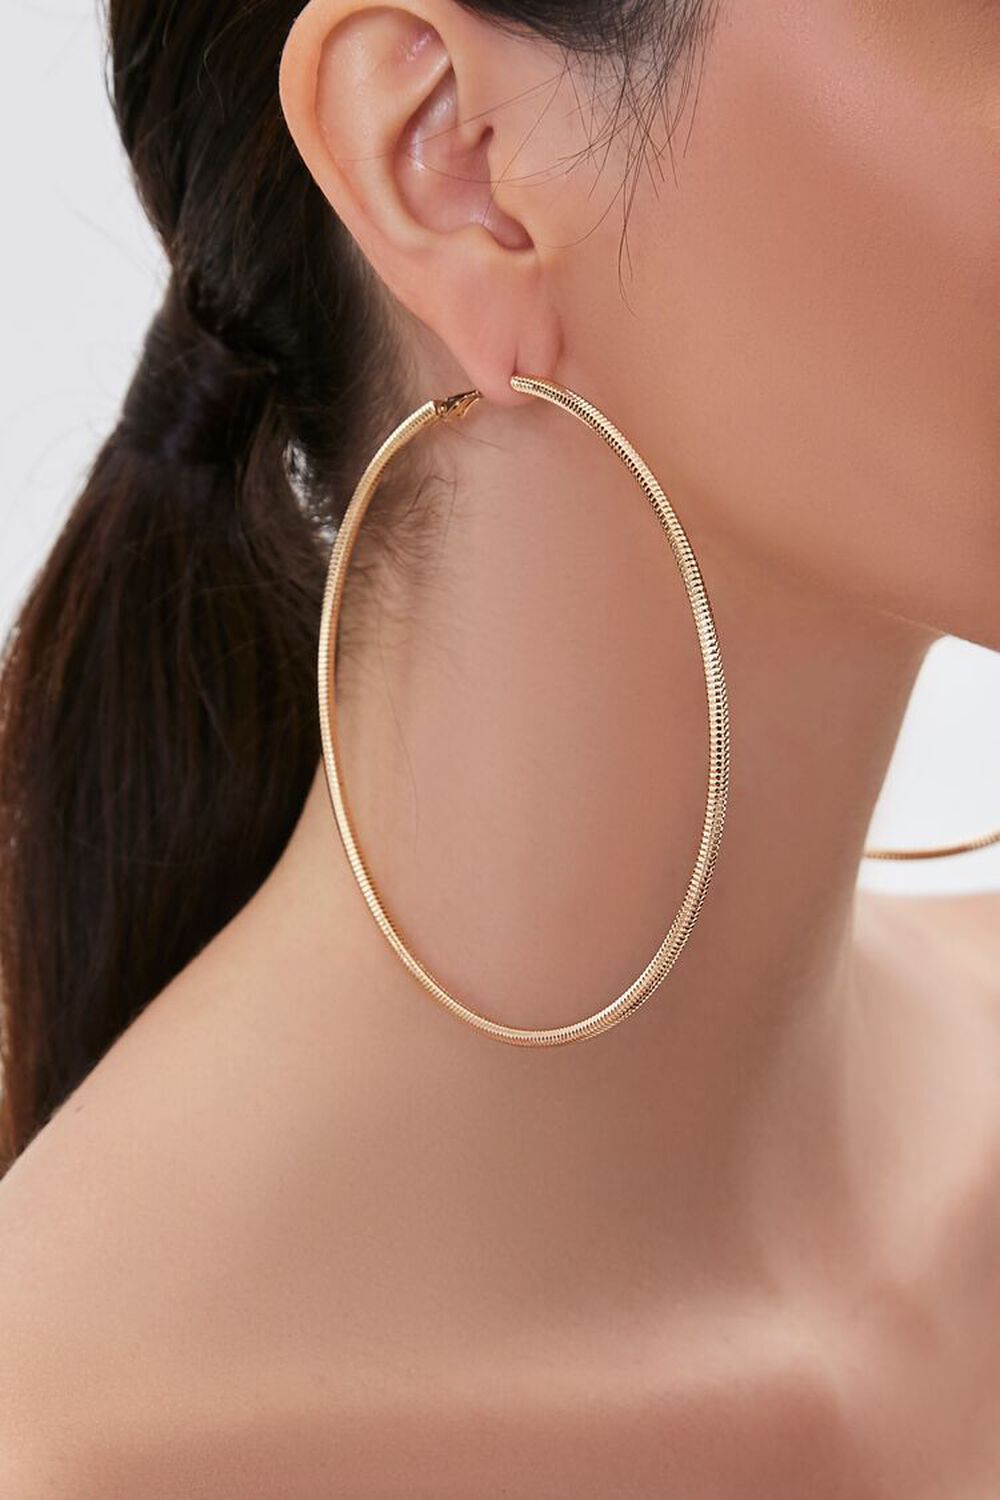 GOLD Oversized Textured Hoop Earrings, image 1